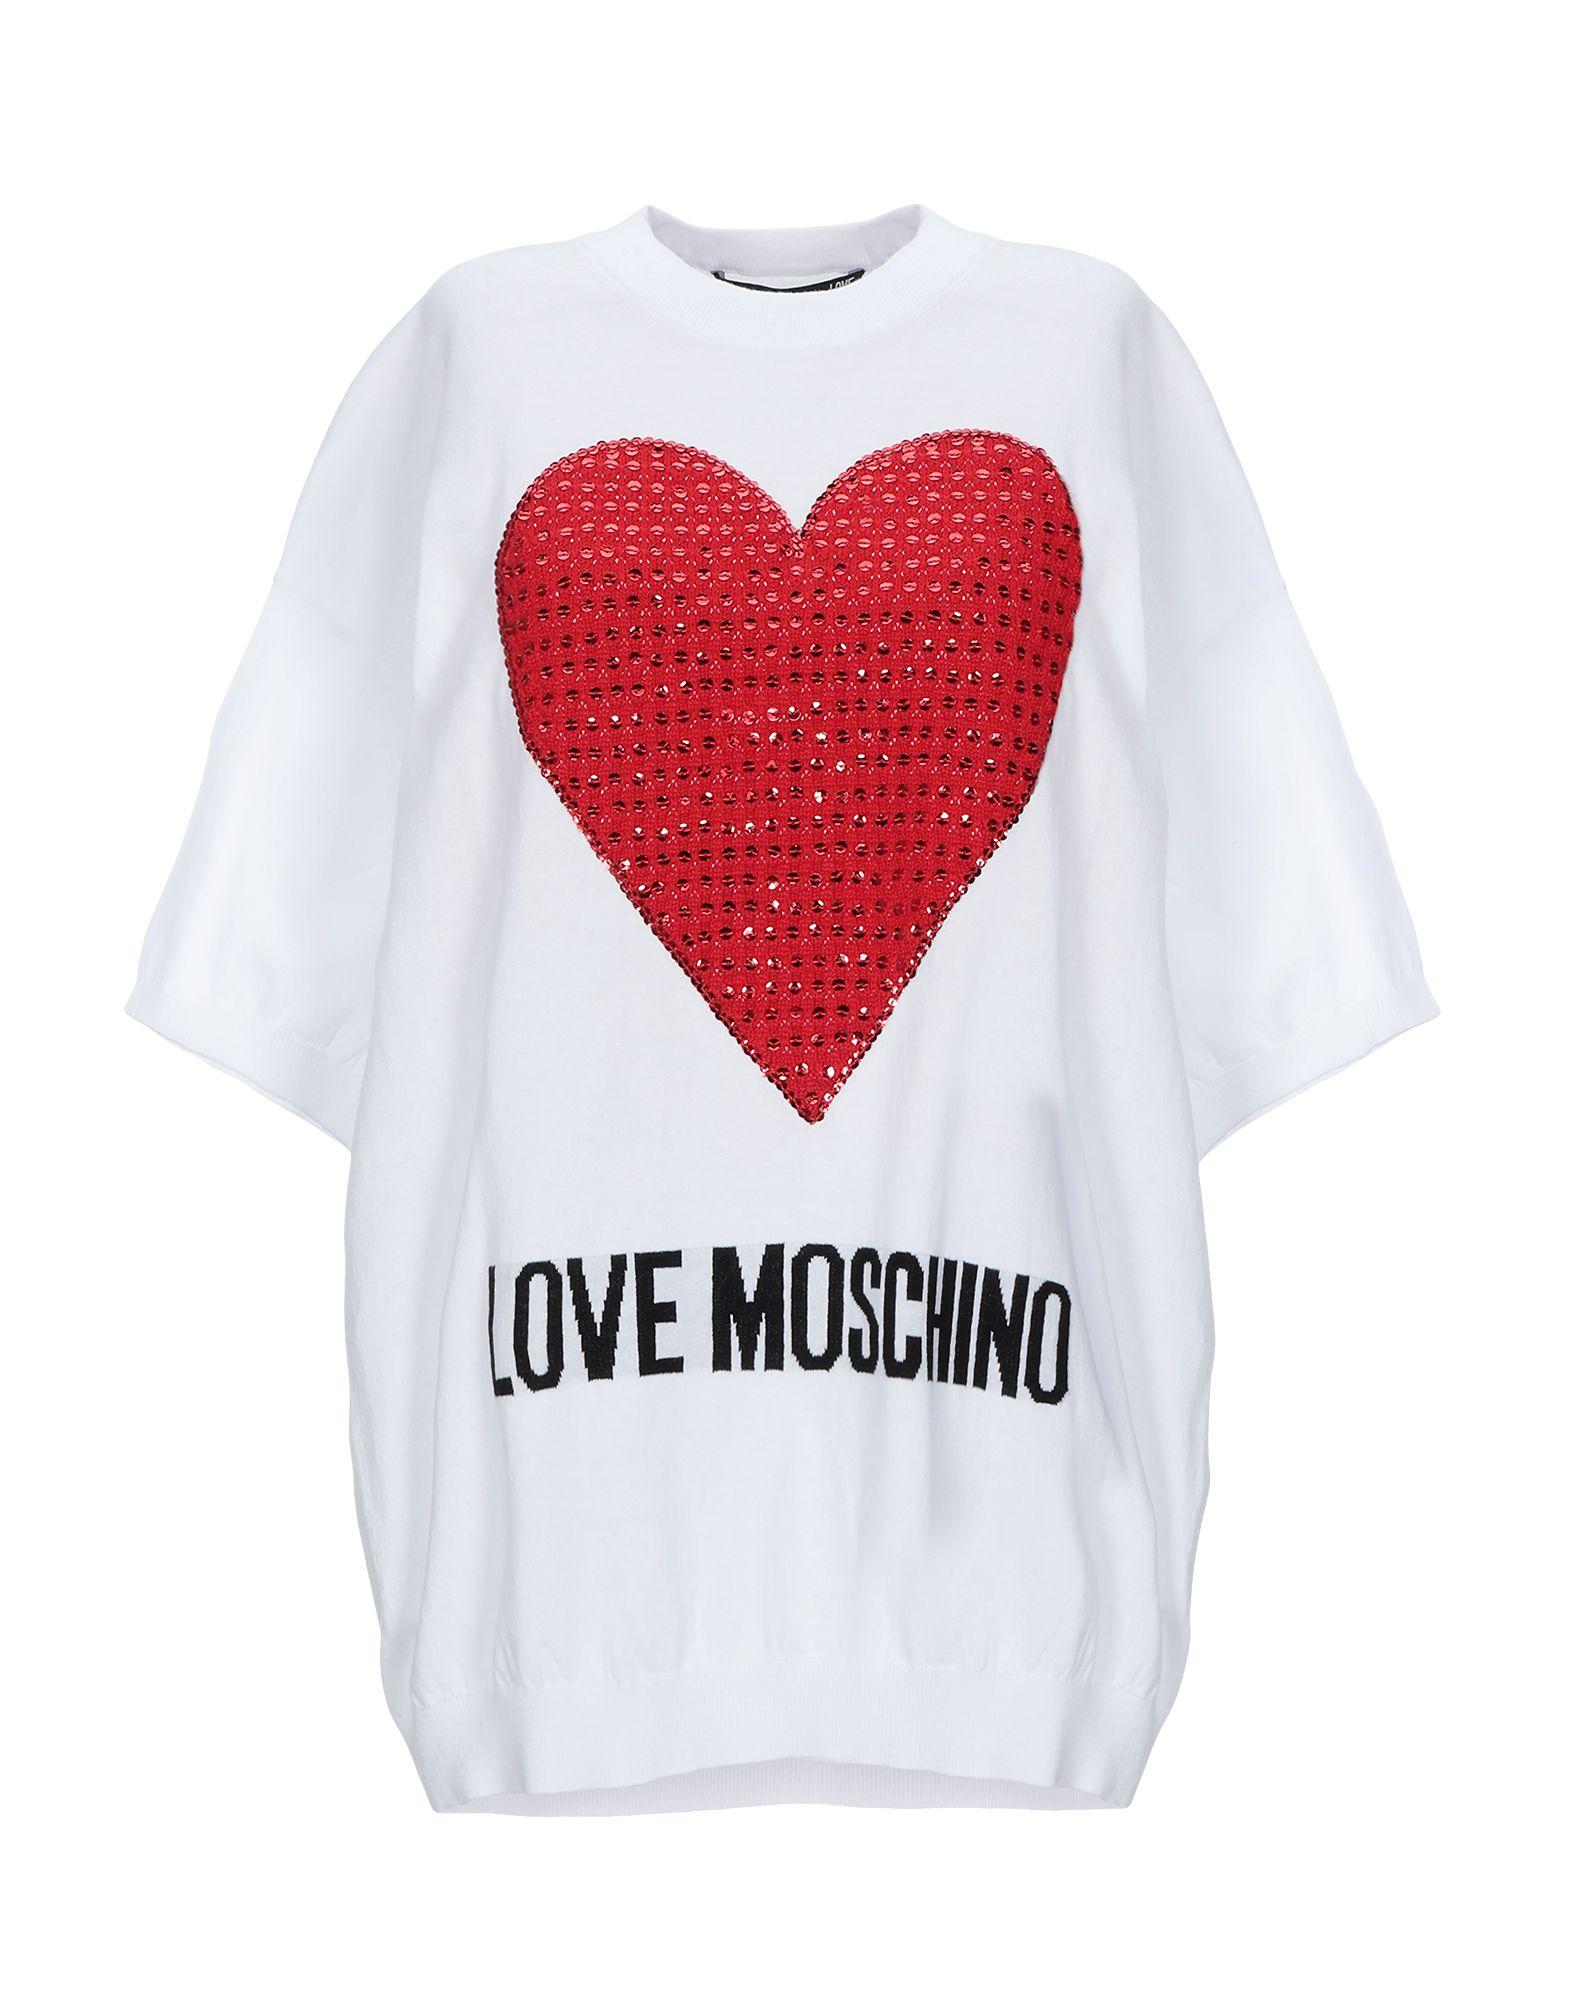 Love Moschino Sweater in White - Lyst